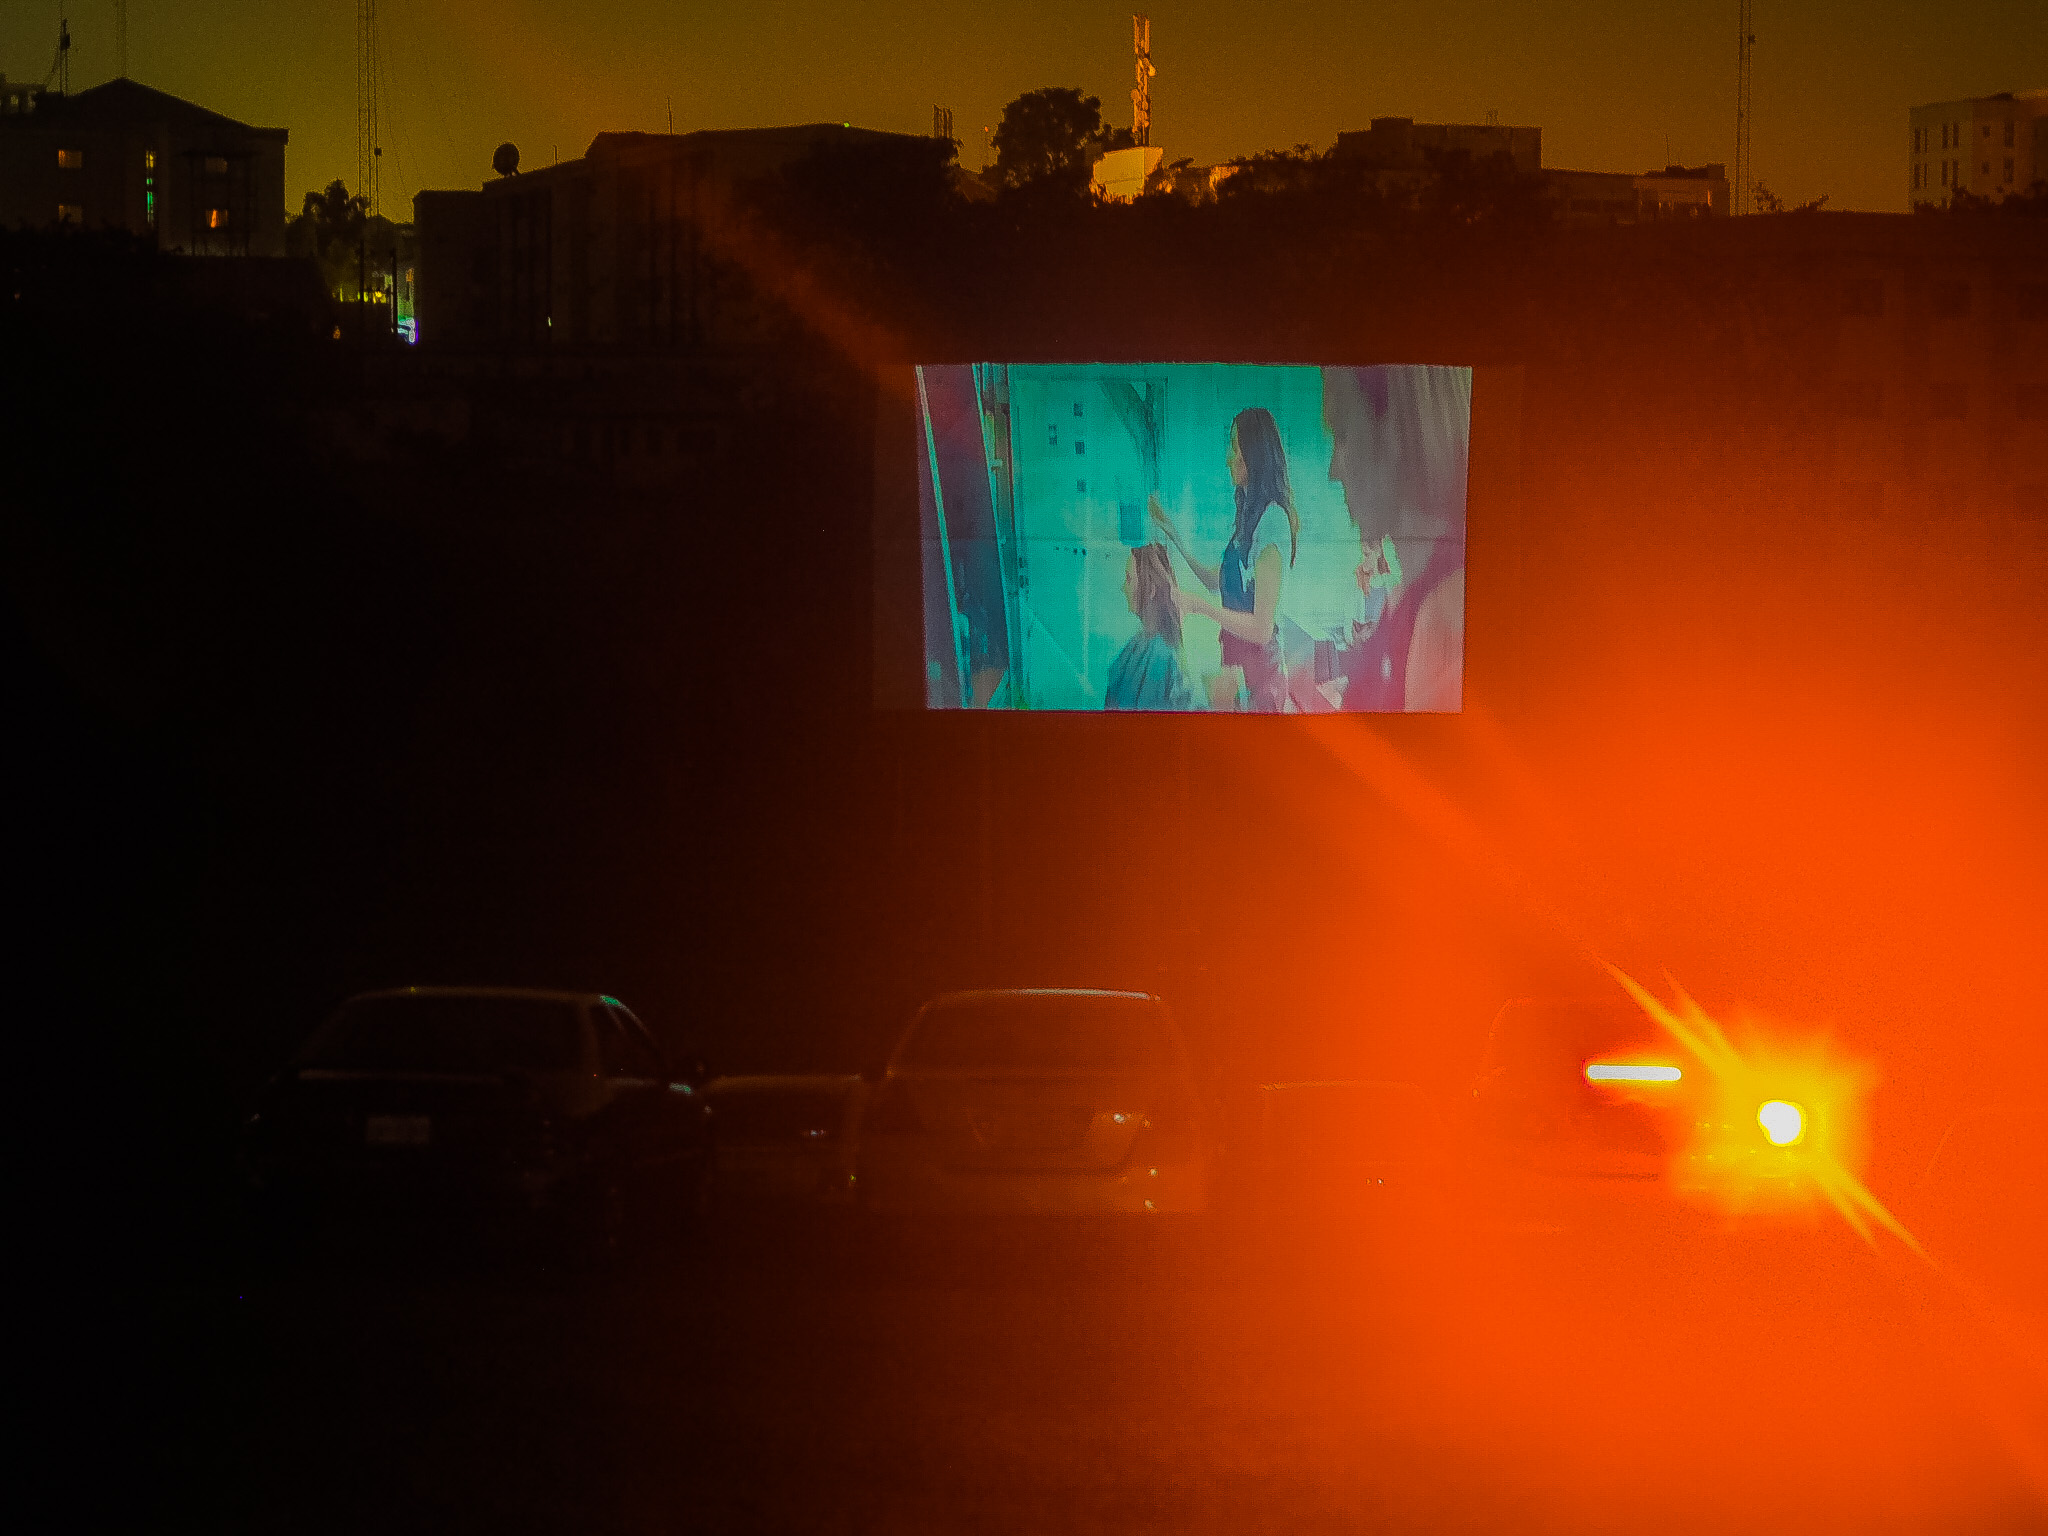 Outdoor cinema in Abuja for adventurers 